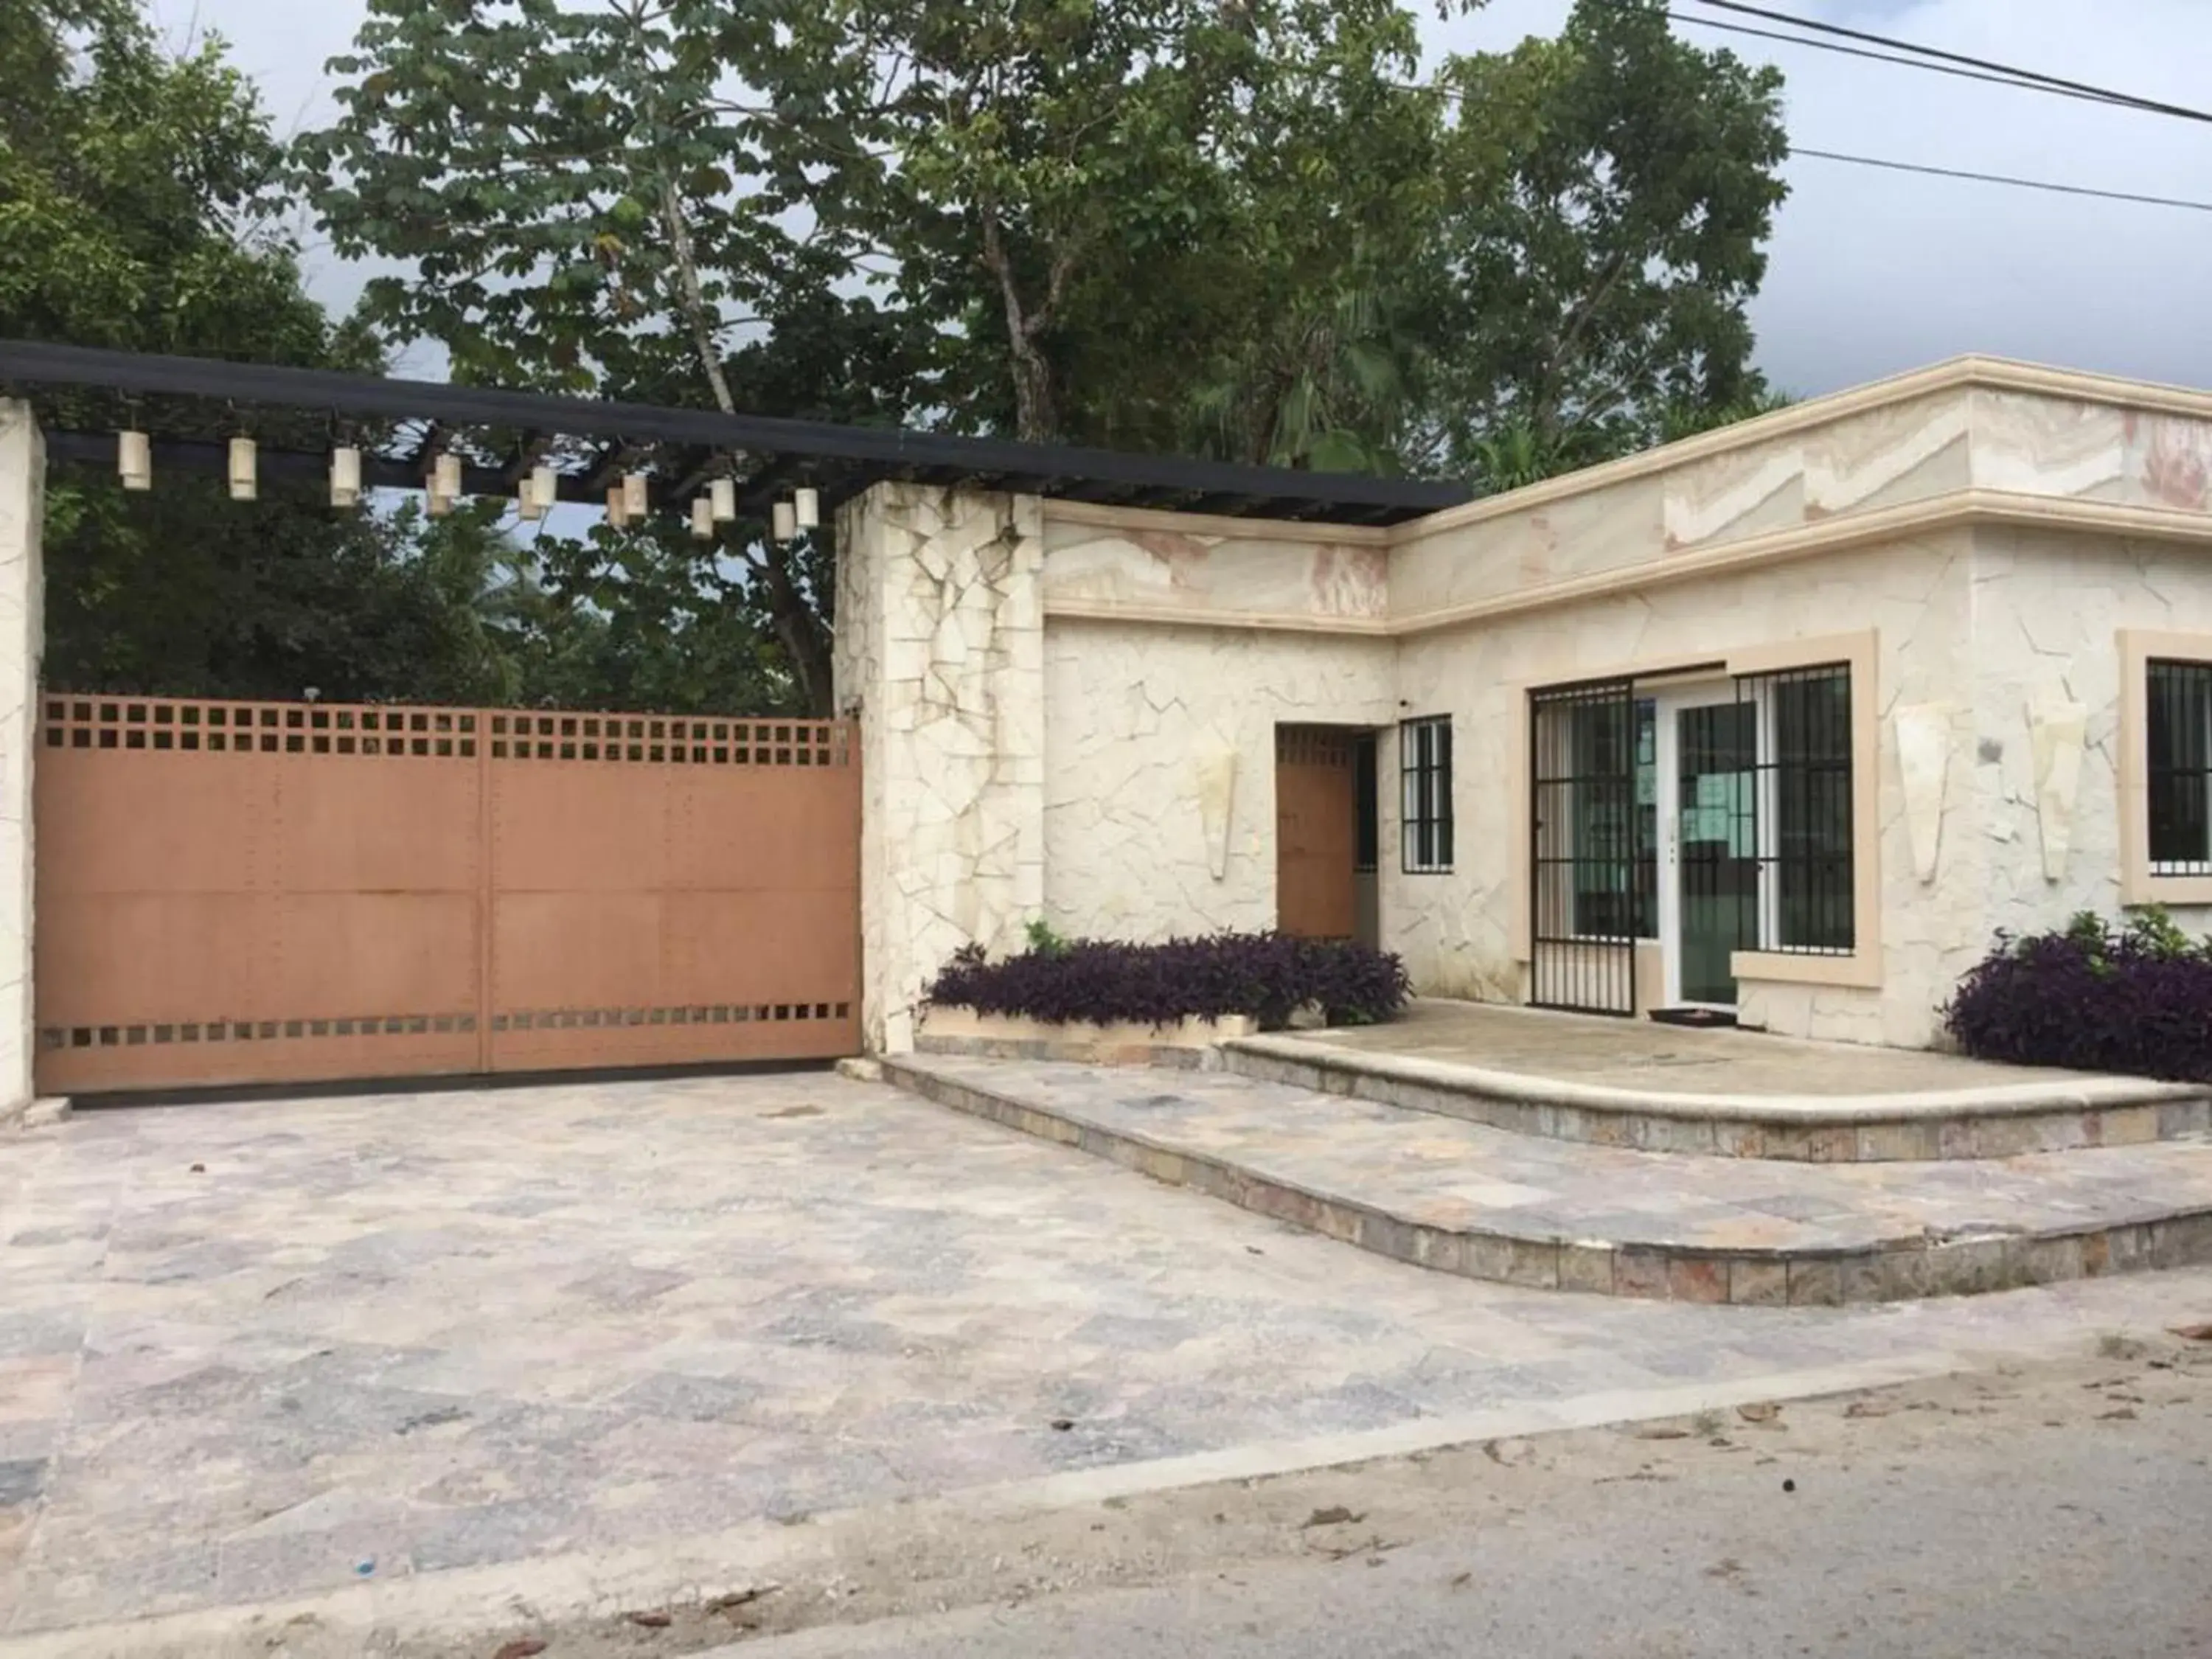 Off site, Property Building in Villas Bakalar